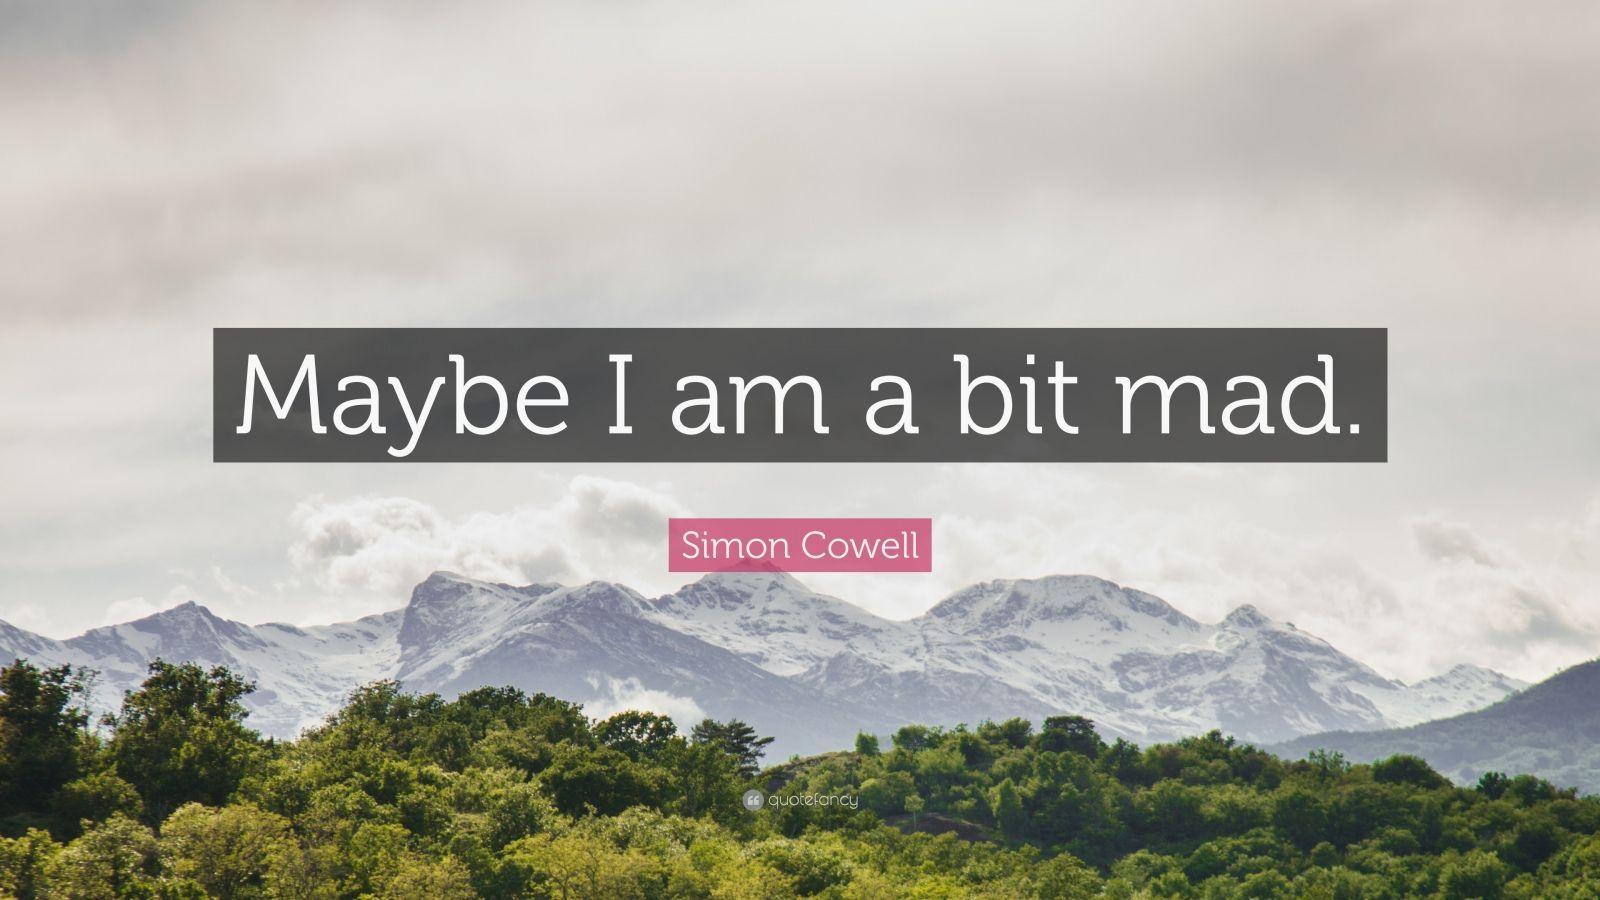 Simon Cowell Quotes (100 wallpaper)